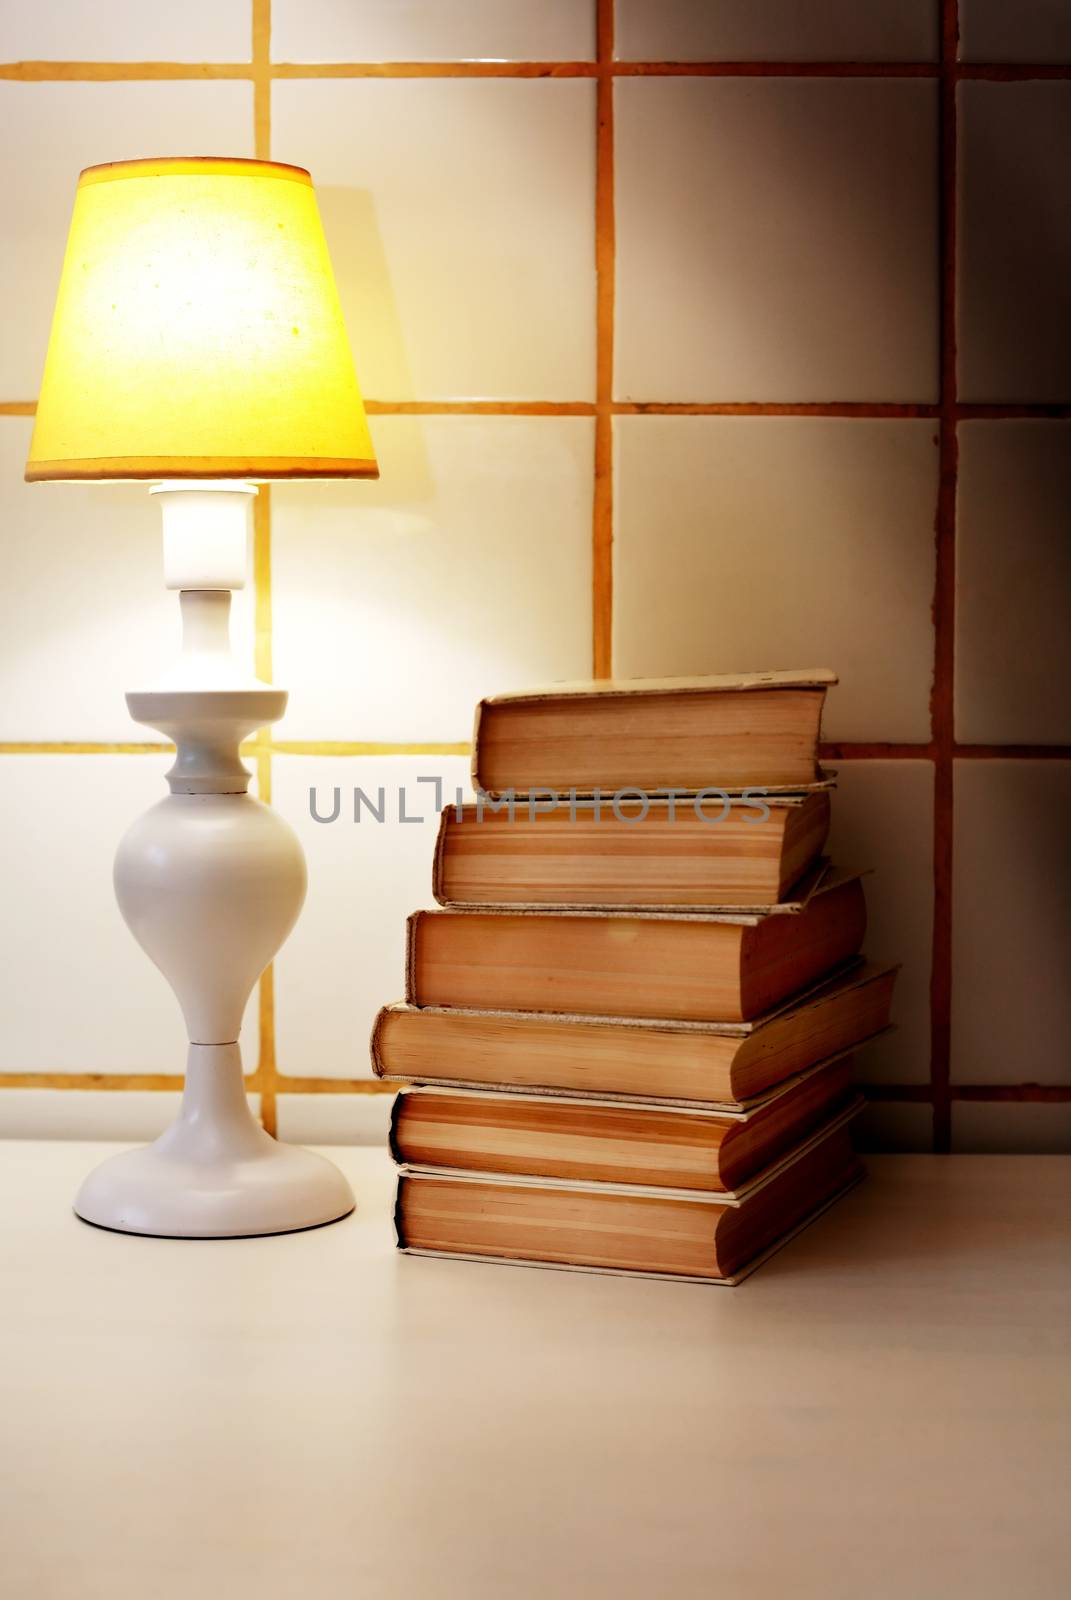 Lamp And Books by kvkirillov